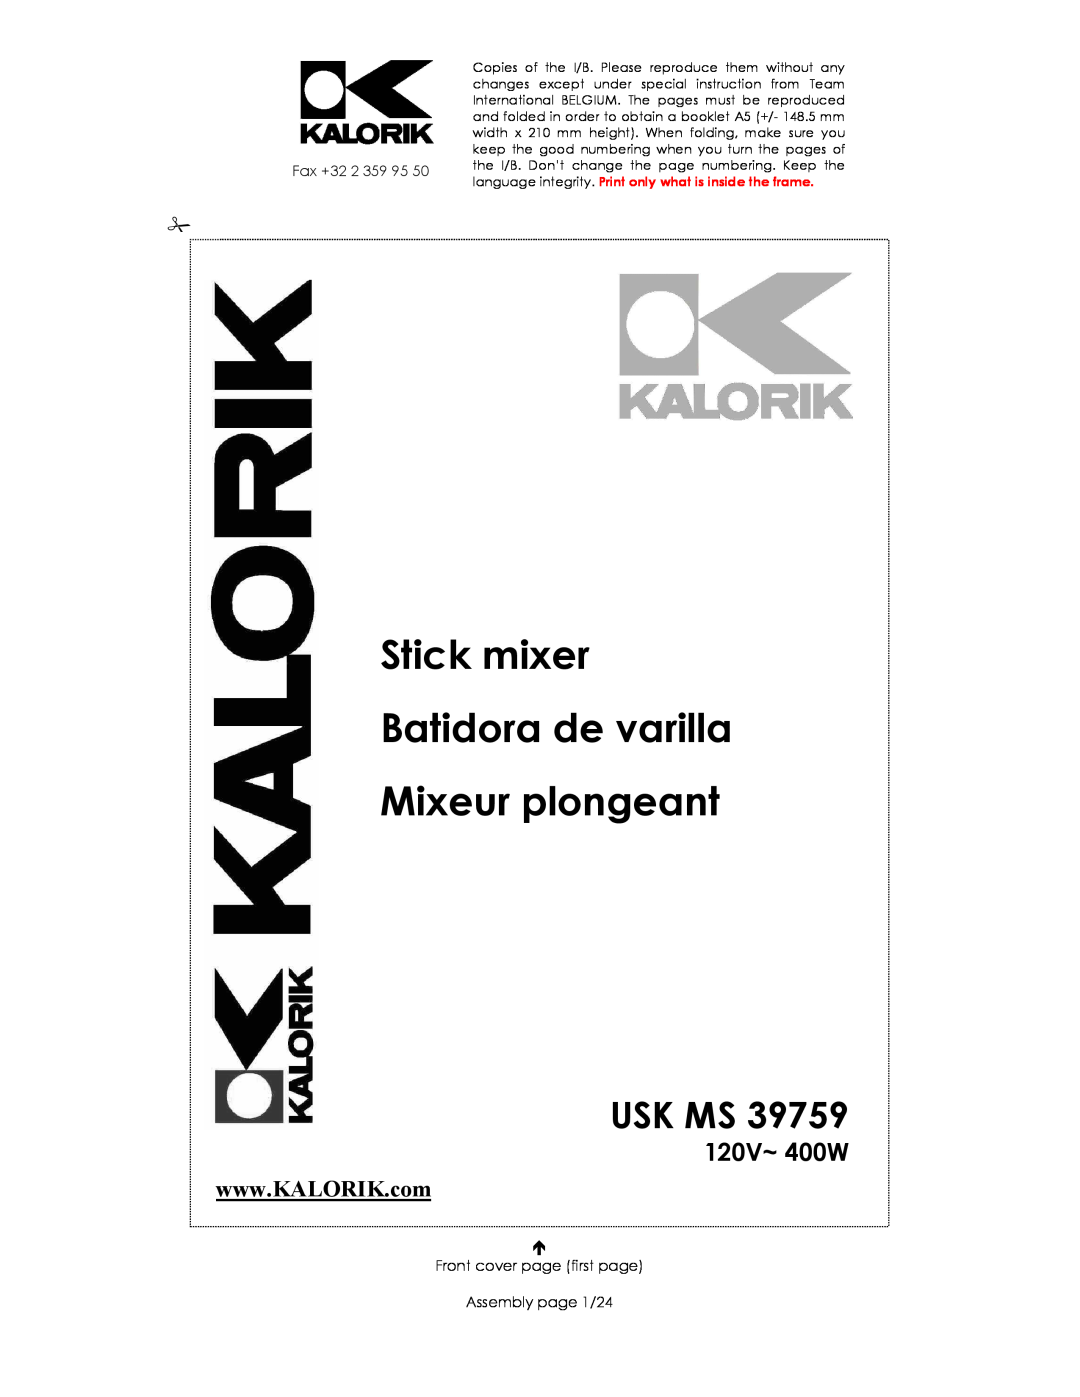 Kalorik uskms39759 manual Stick mixer Batidora de varilla Mixeur plongeant, Usk Ms, 120V~ 400W, Fax +32 2 